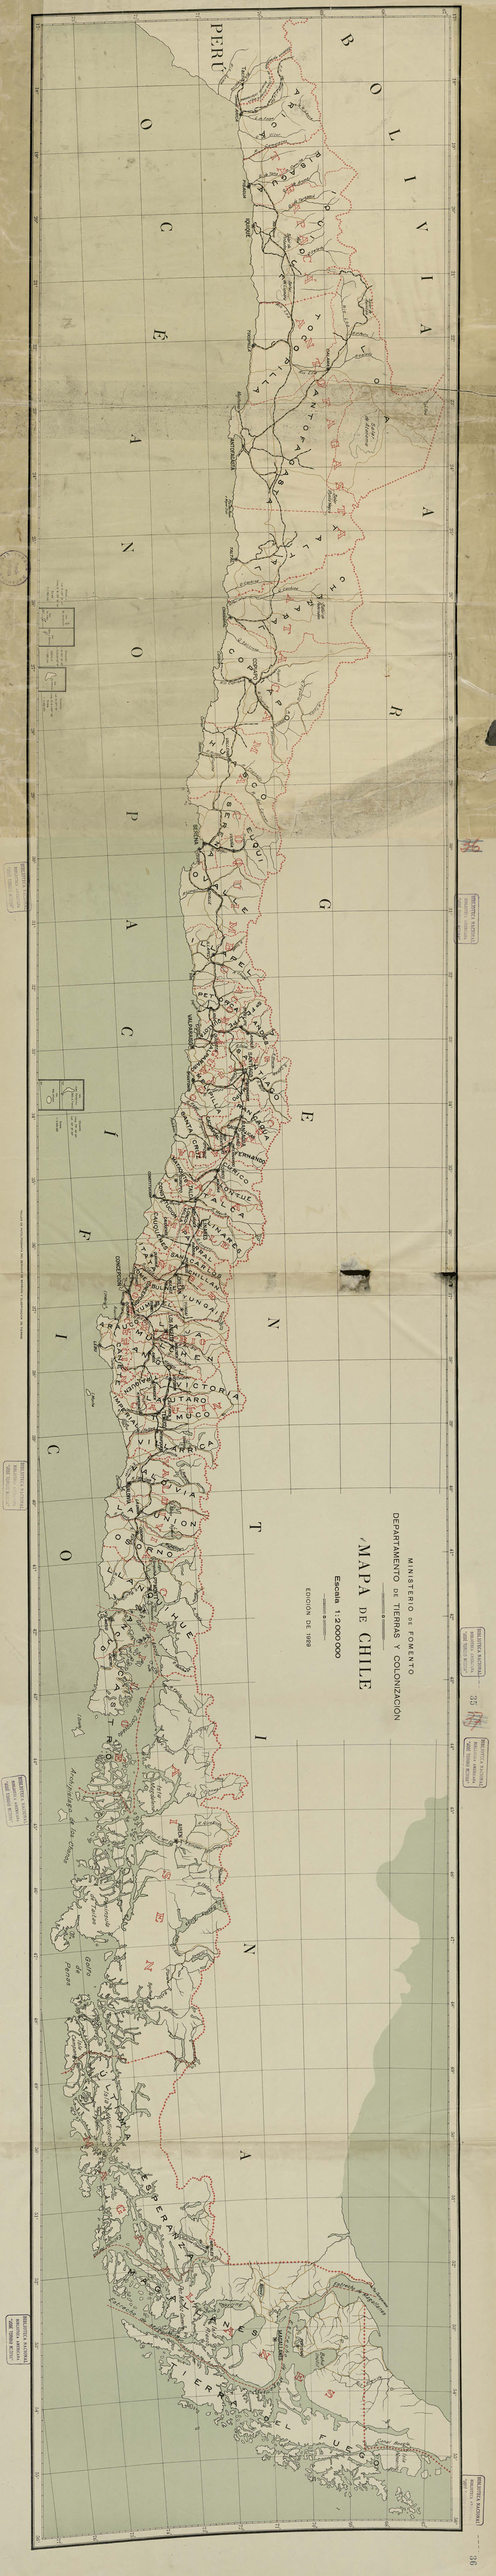 Mapa de Chile [material cartográfico]